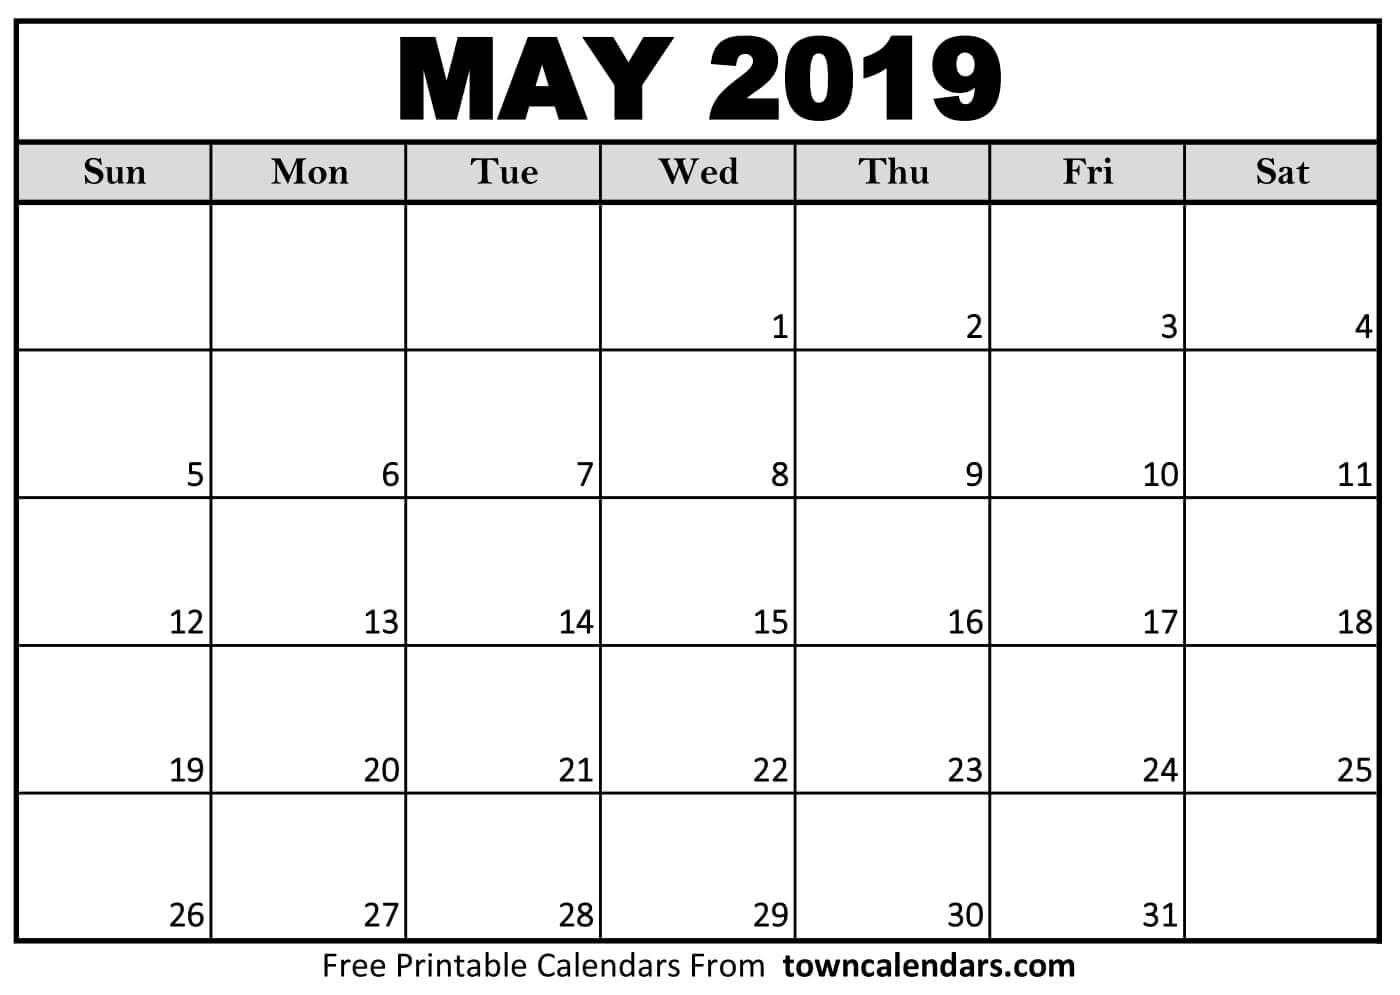 Printable May 2019 Calendar towncalendars